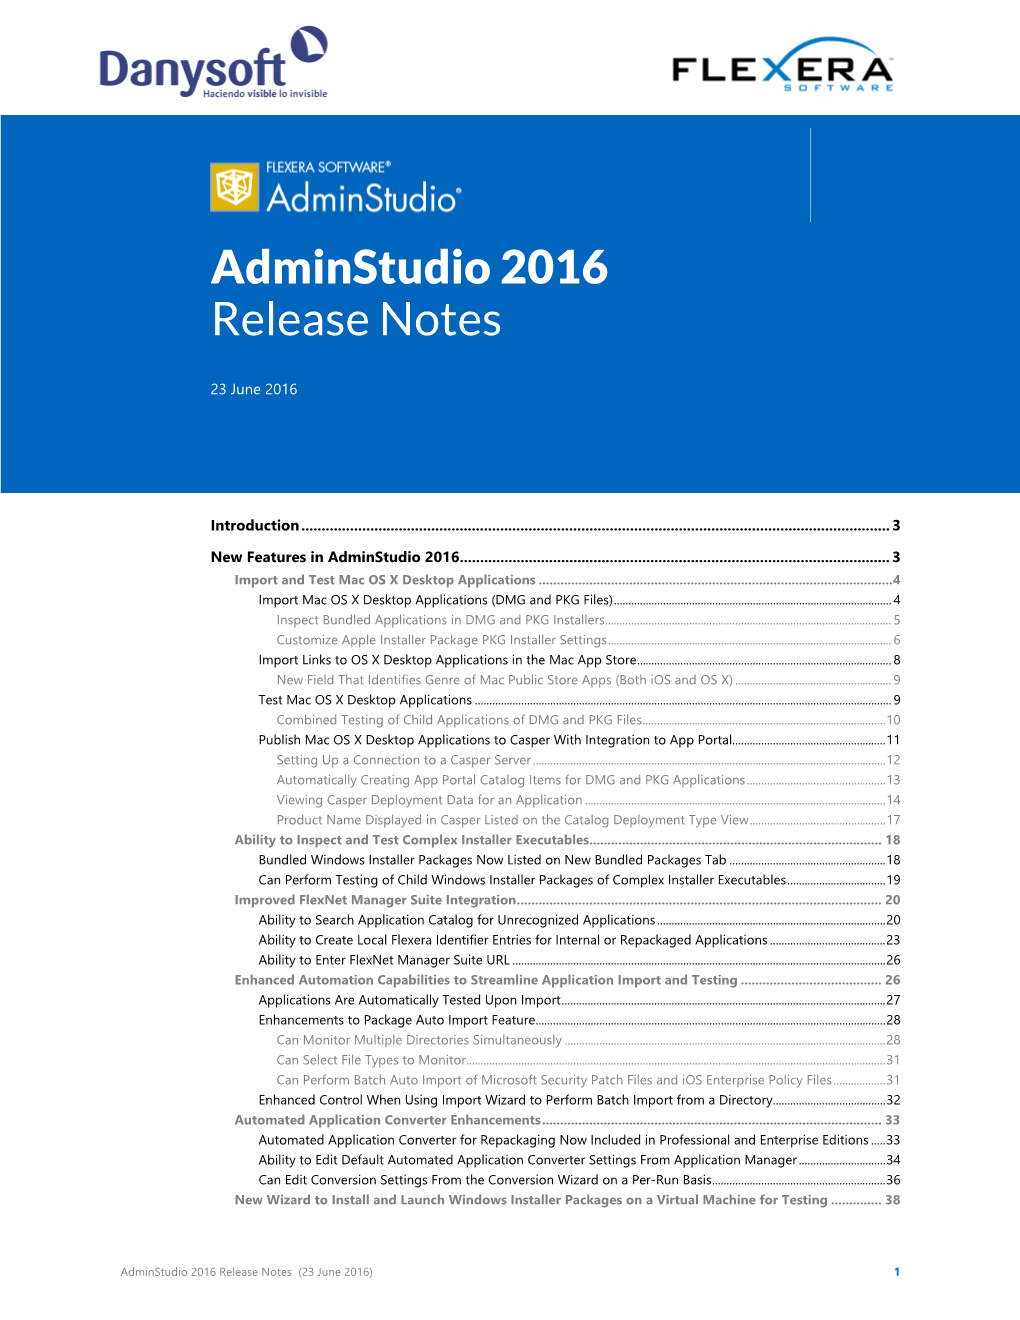 Adminstudio 2016 Release Notes